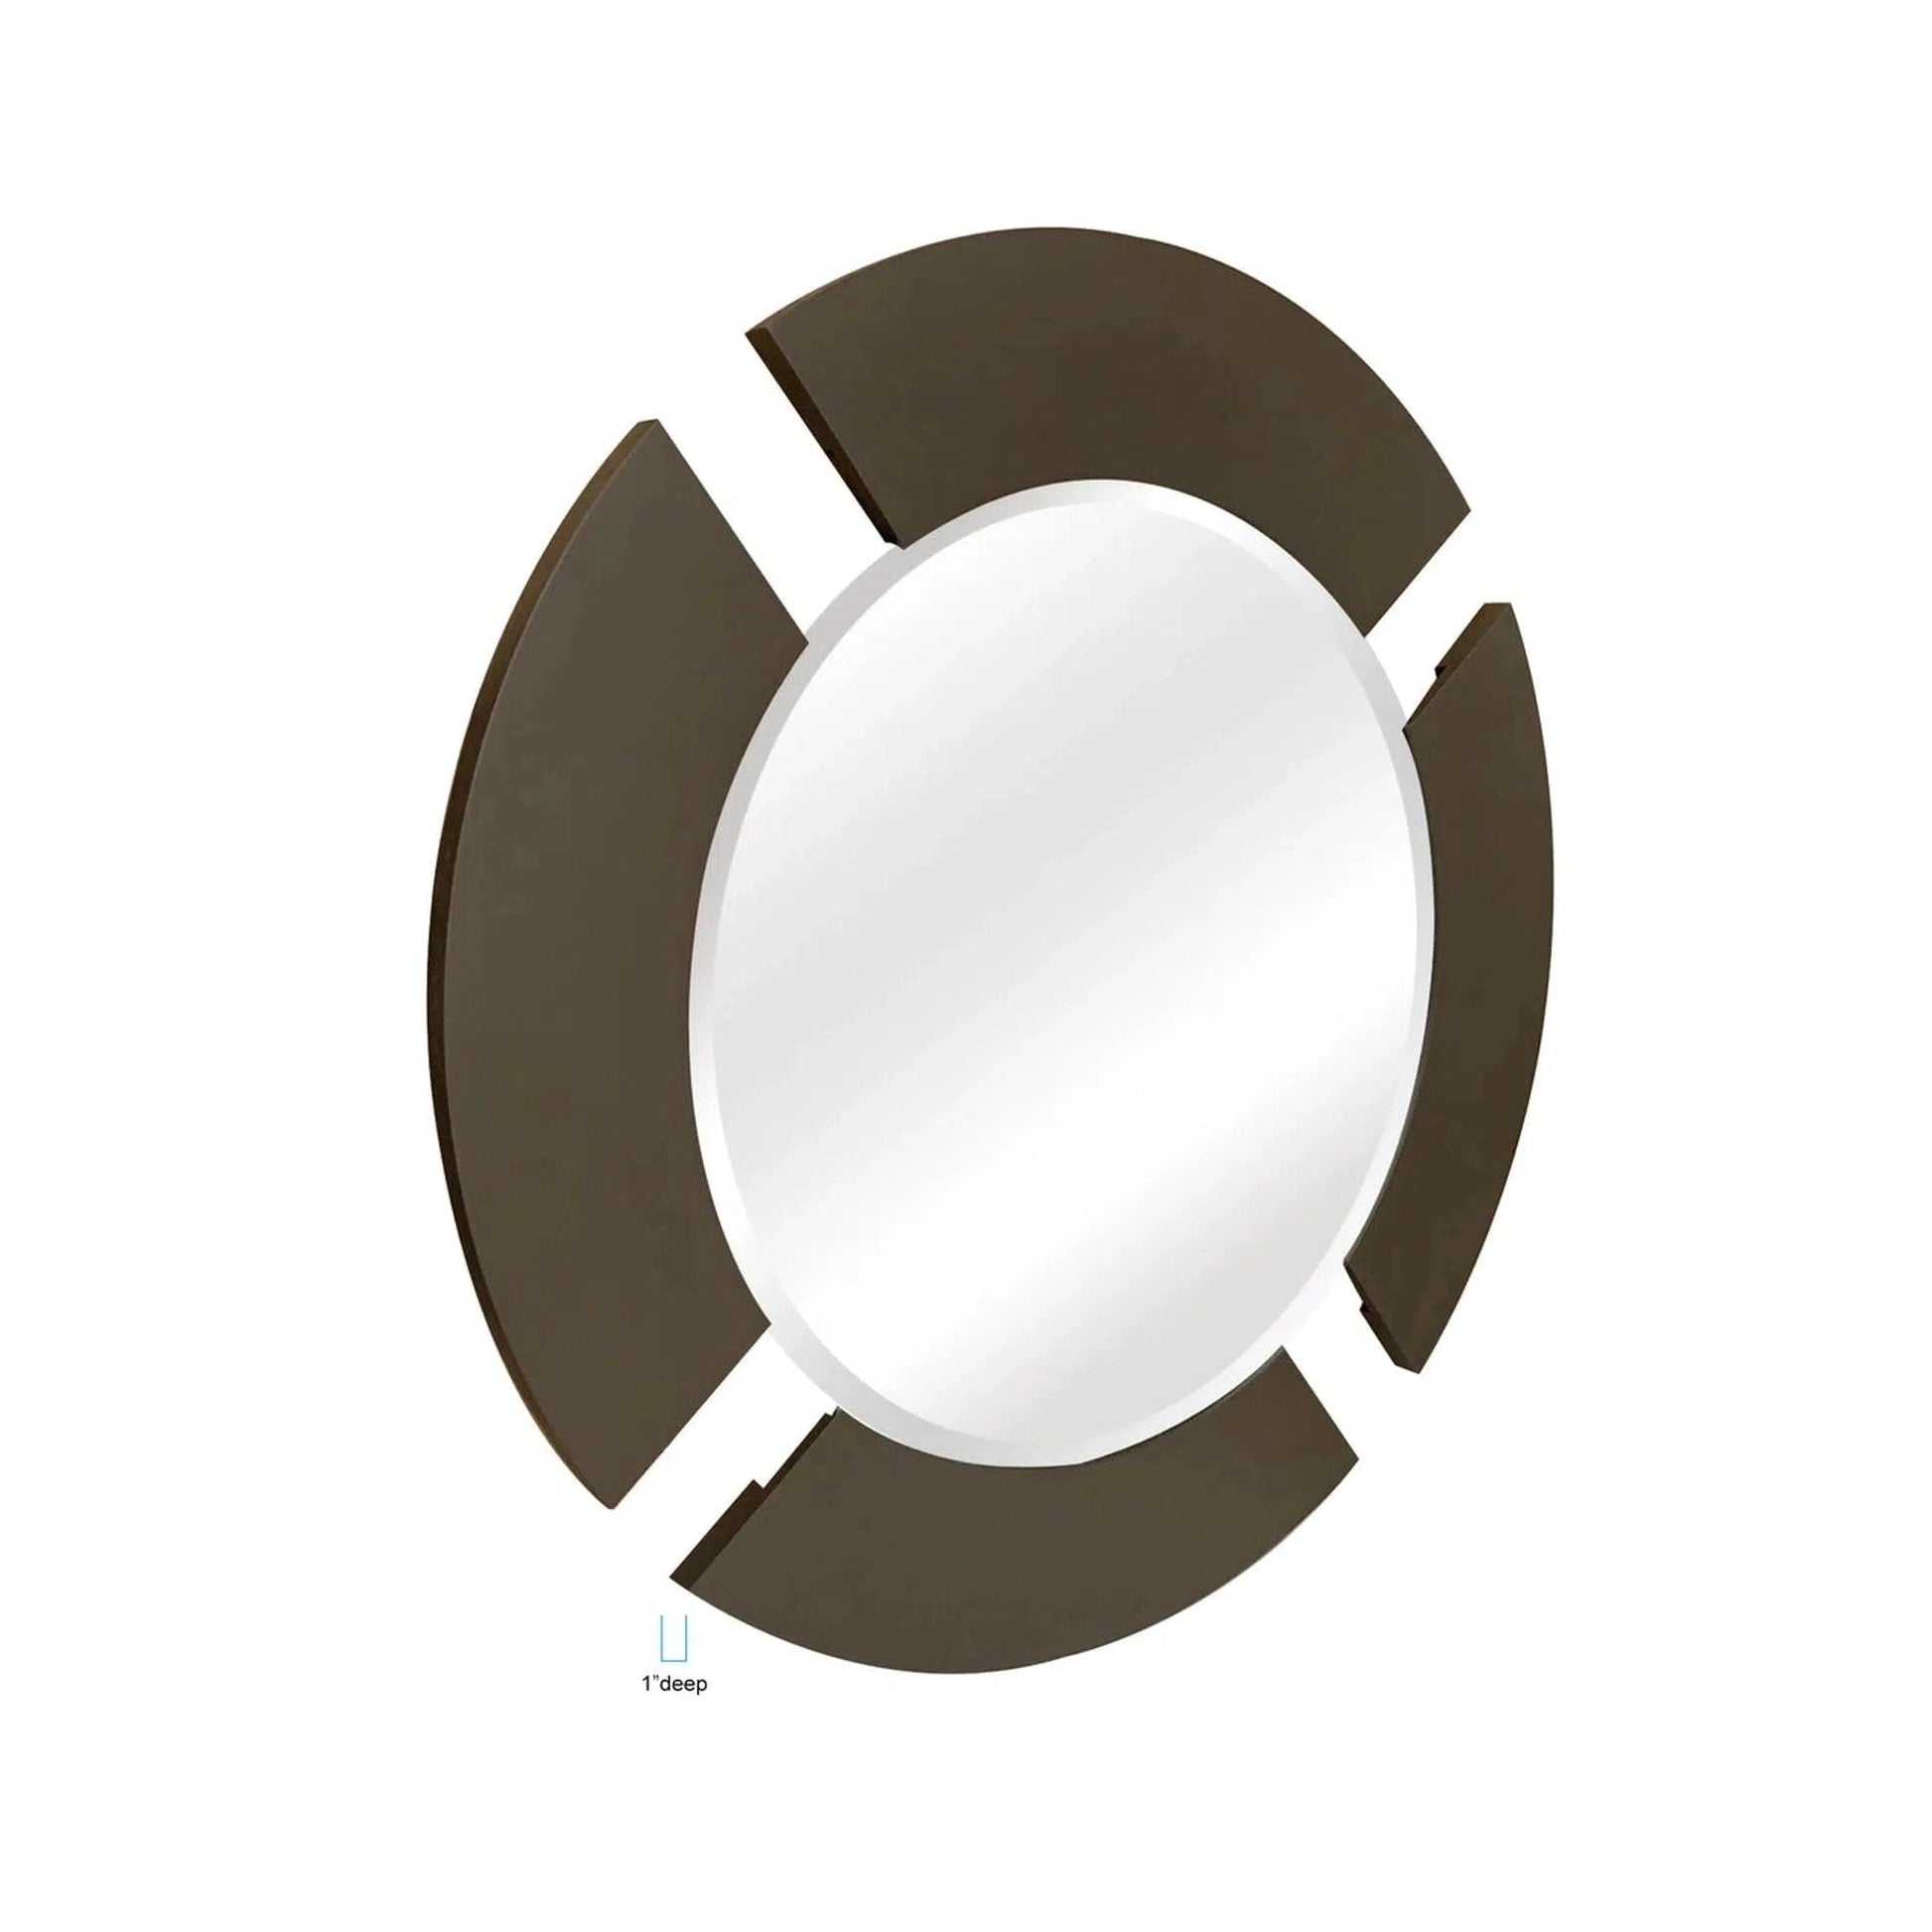 Capri Round LED Mirror Illuminated Frame with Touch Sensor - Chrome